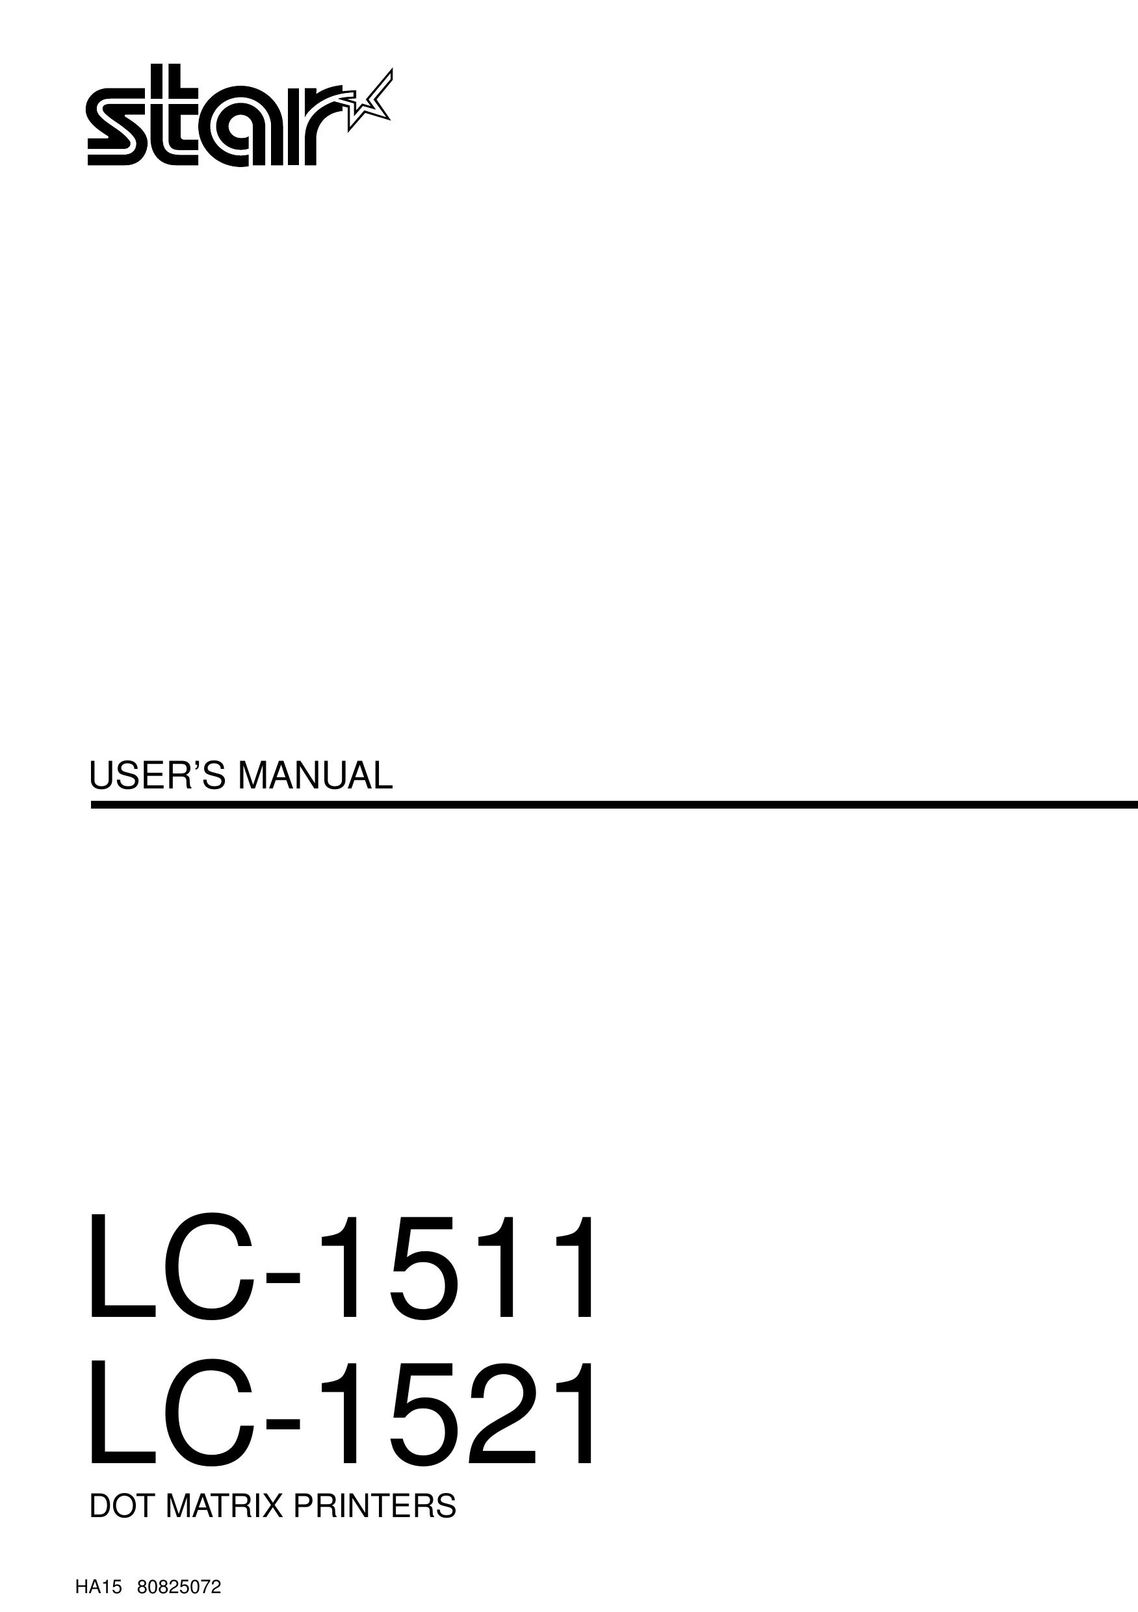 Star Micronics LC-1521 Printer User Manual